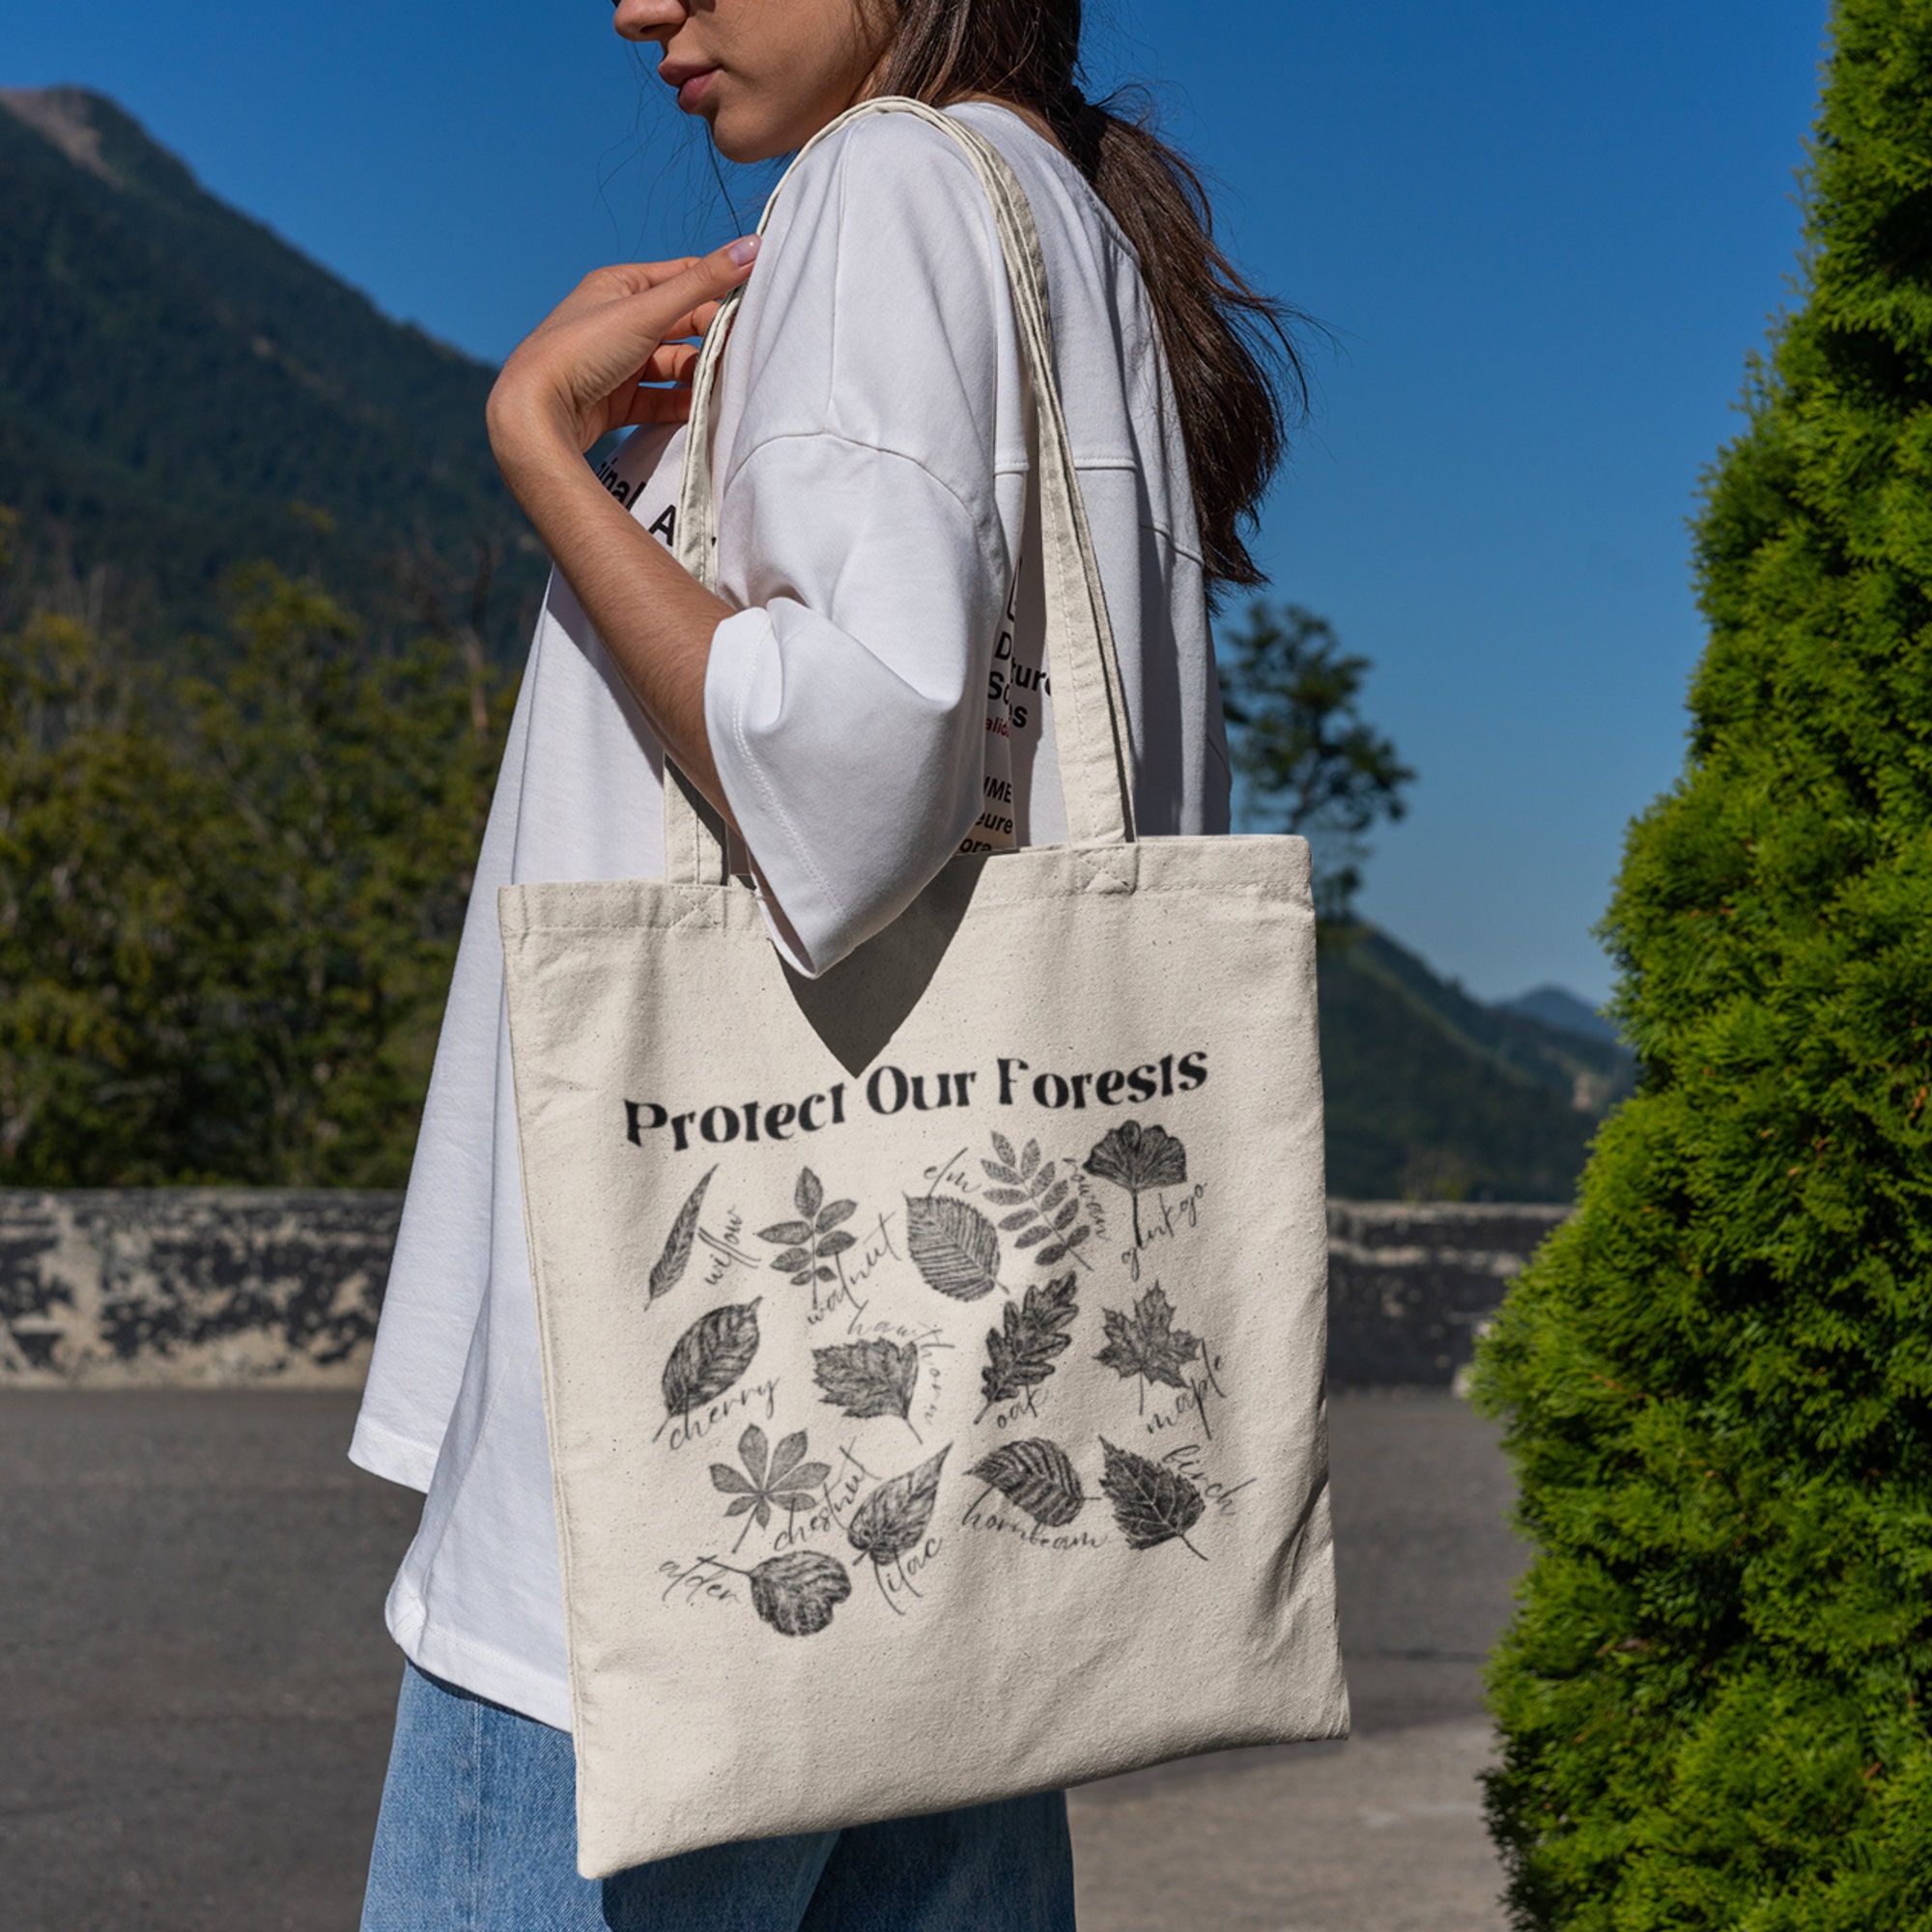 Girly Girl Things Tote Bag for Sale by MatsonArtDesign